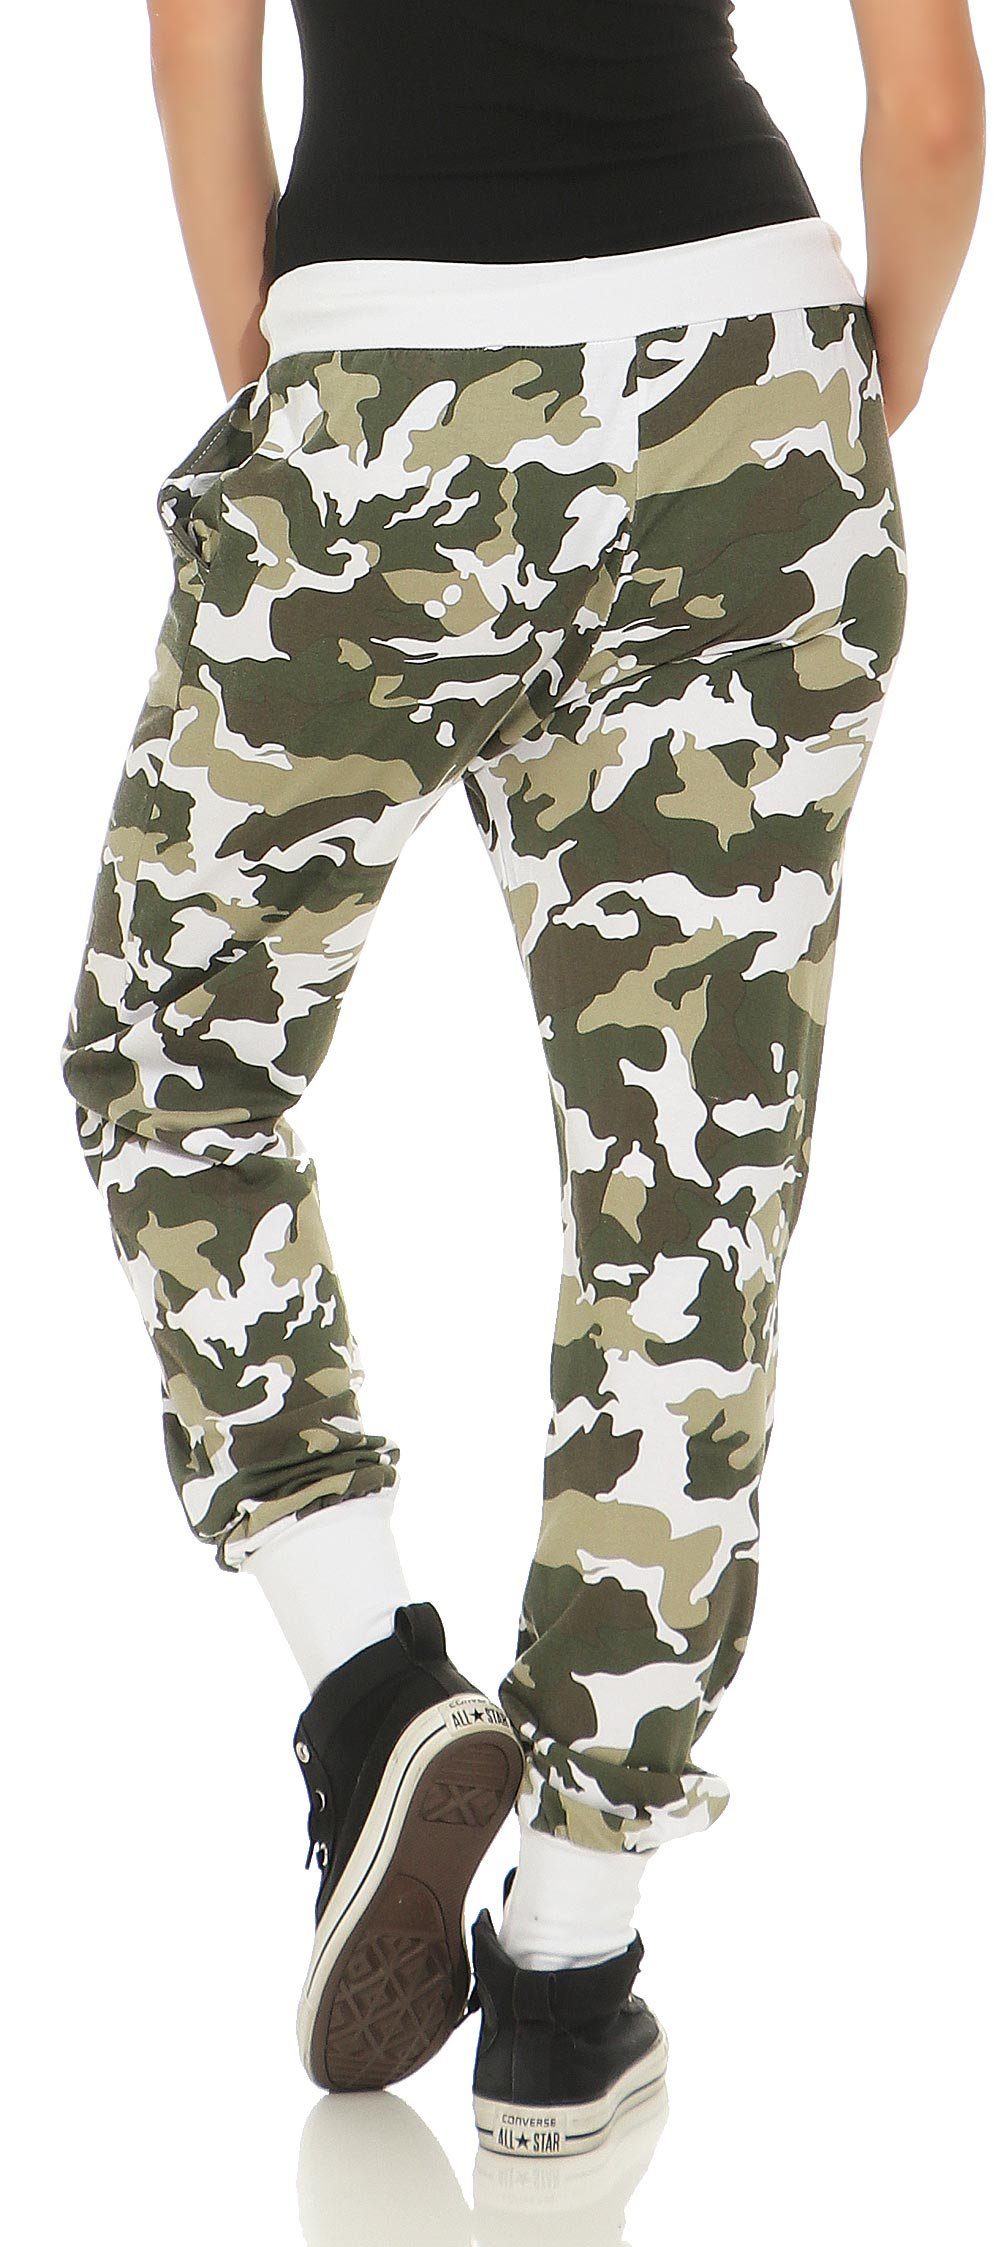 Camouflage malito Look im Jogginghose than more Sweathose 8019 weiß fashion